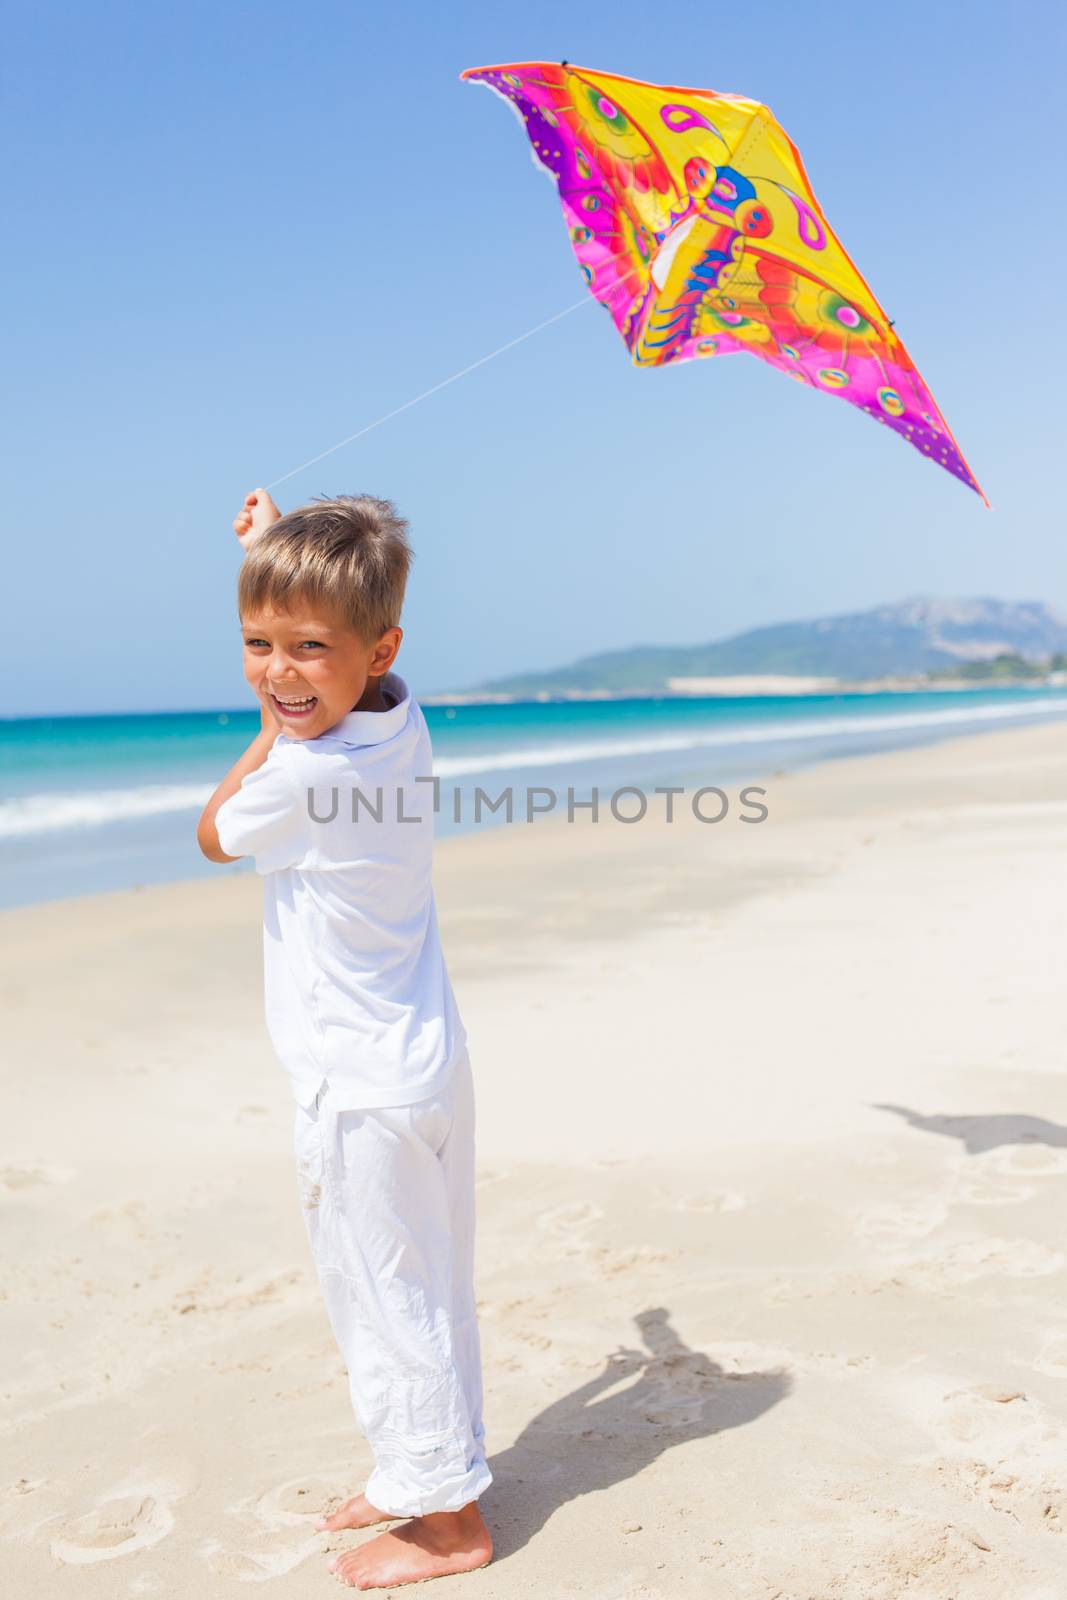 Child flying kite beach outdoor. by maxoliki